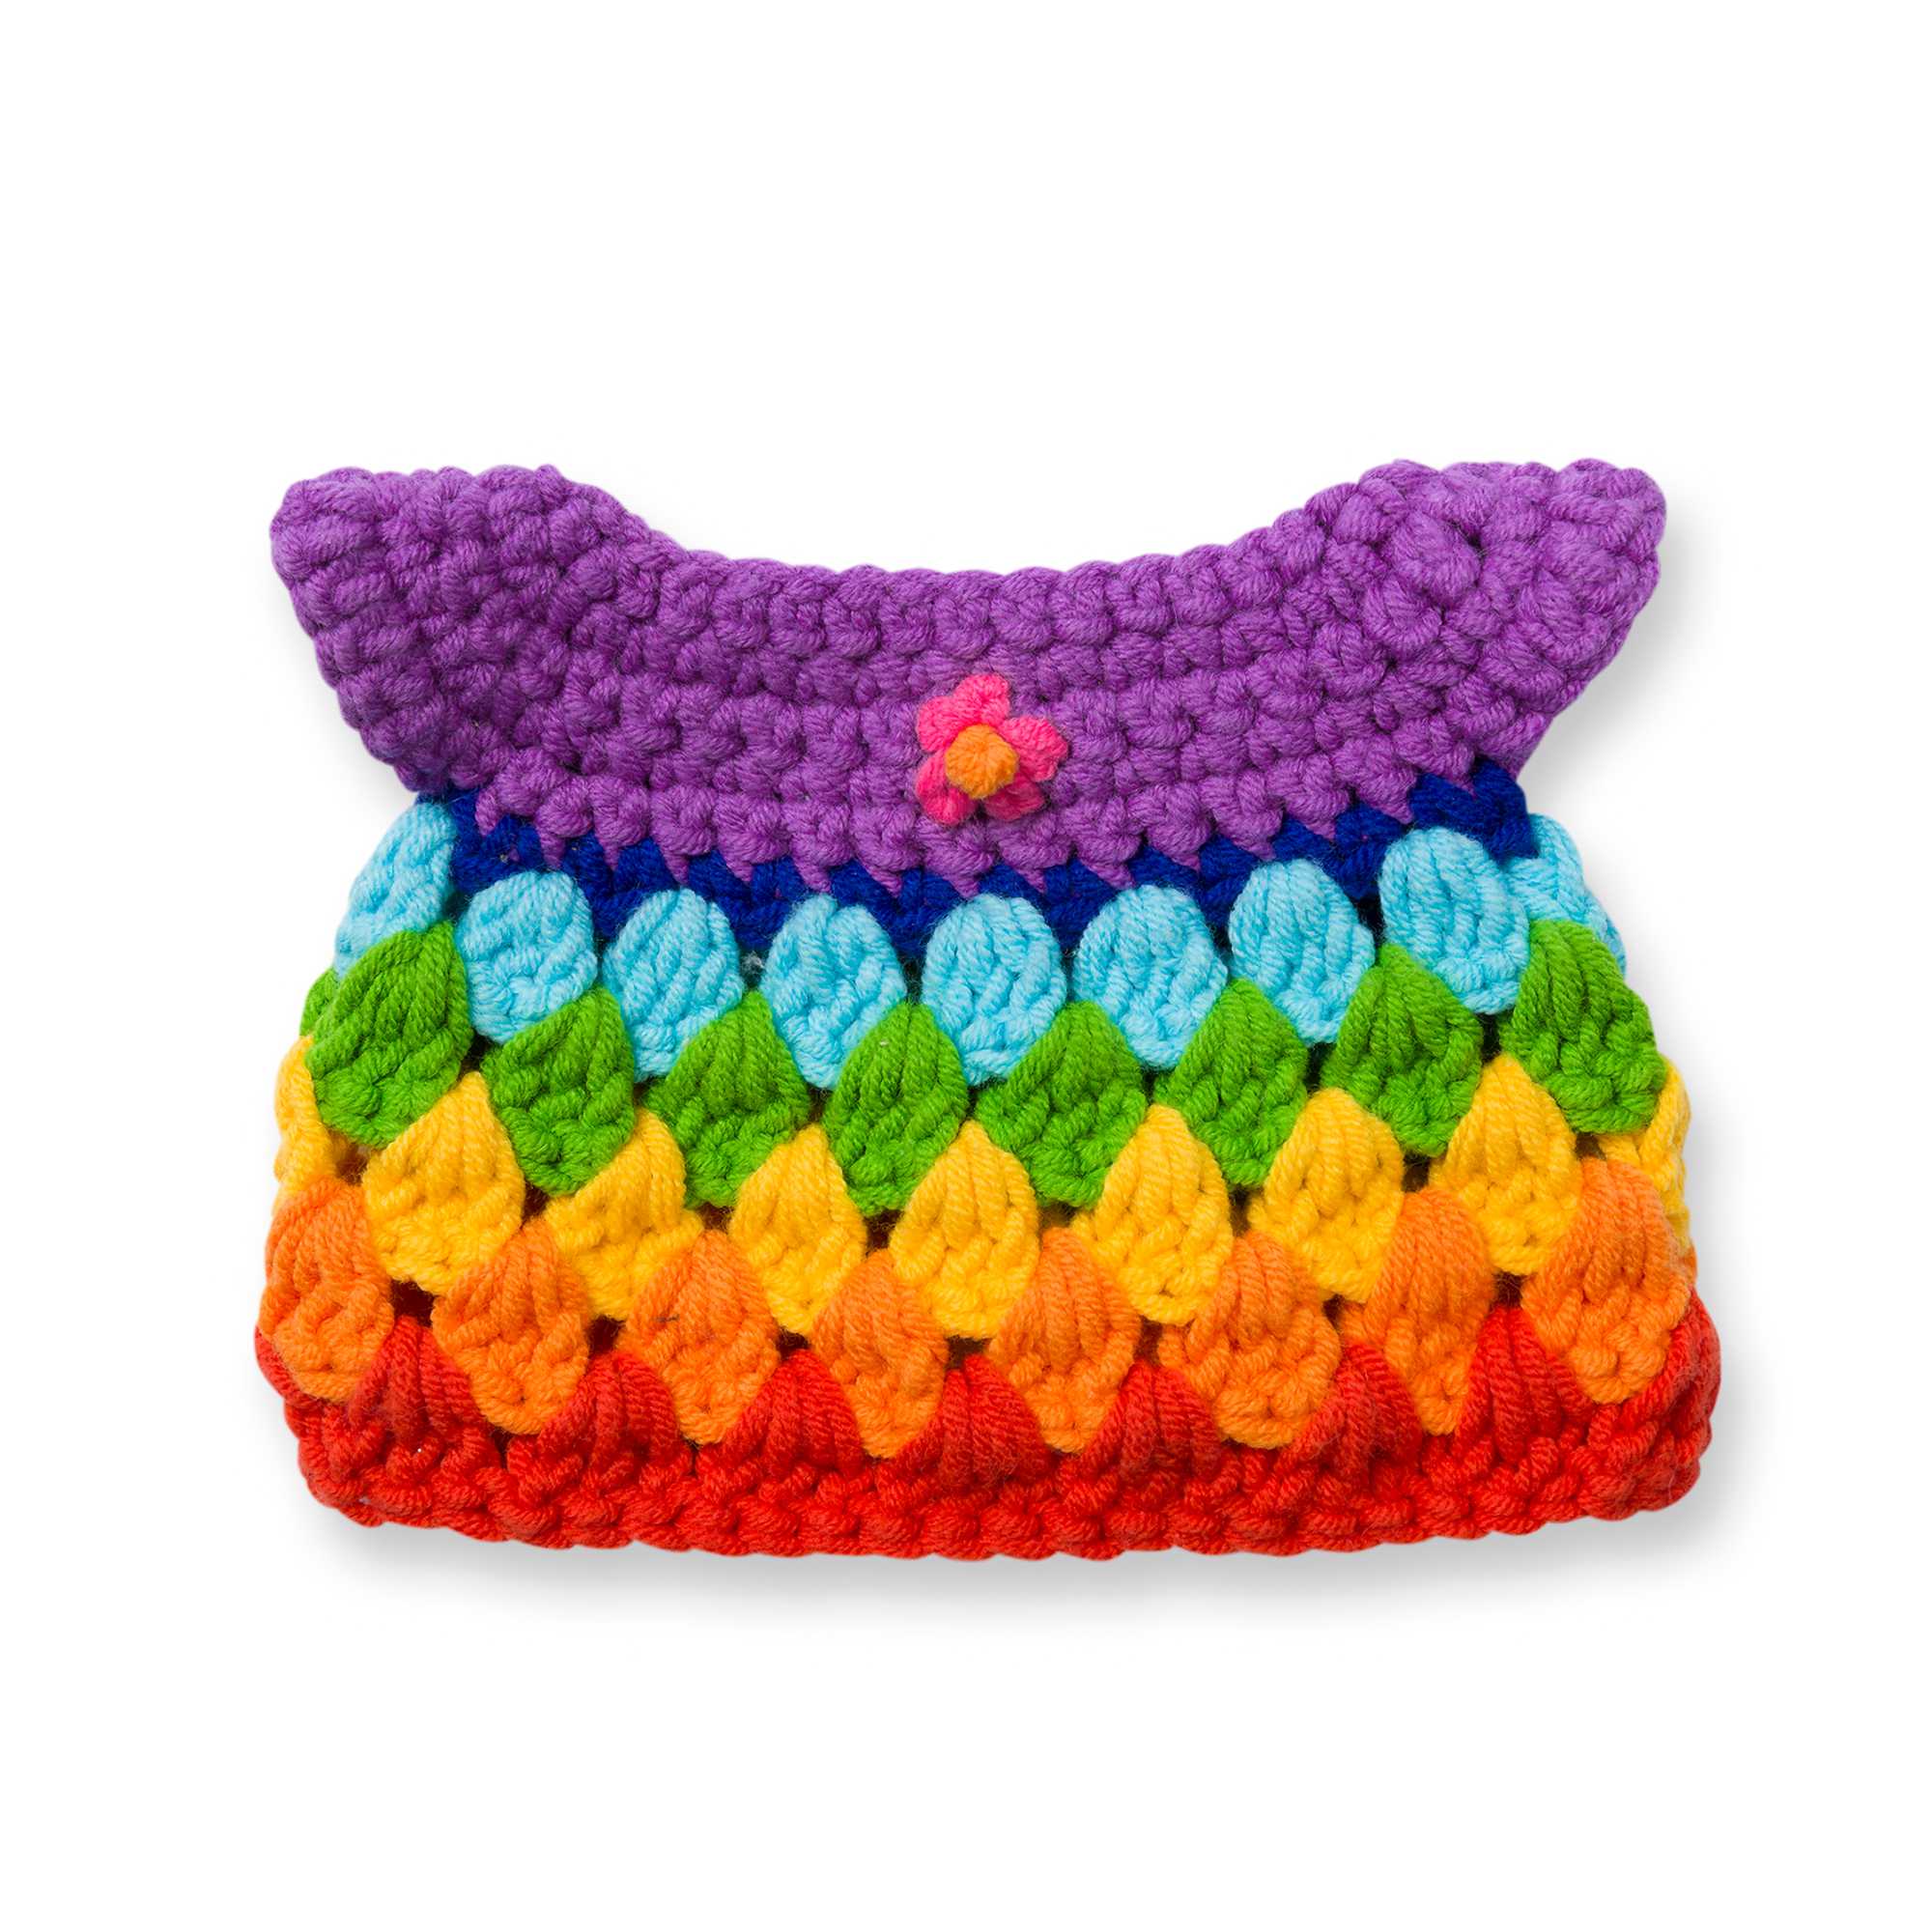 Just Dutch handmade crocheted outfit, Bright Rainbow Dress